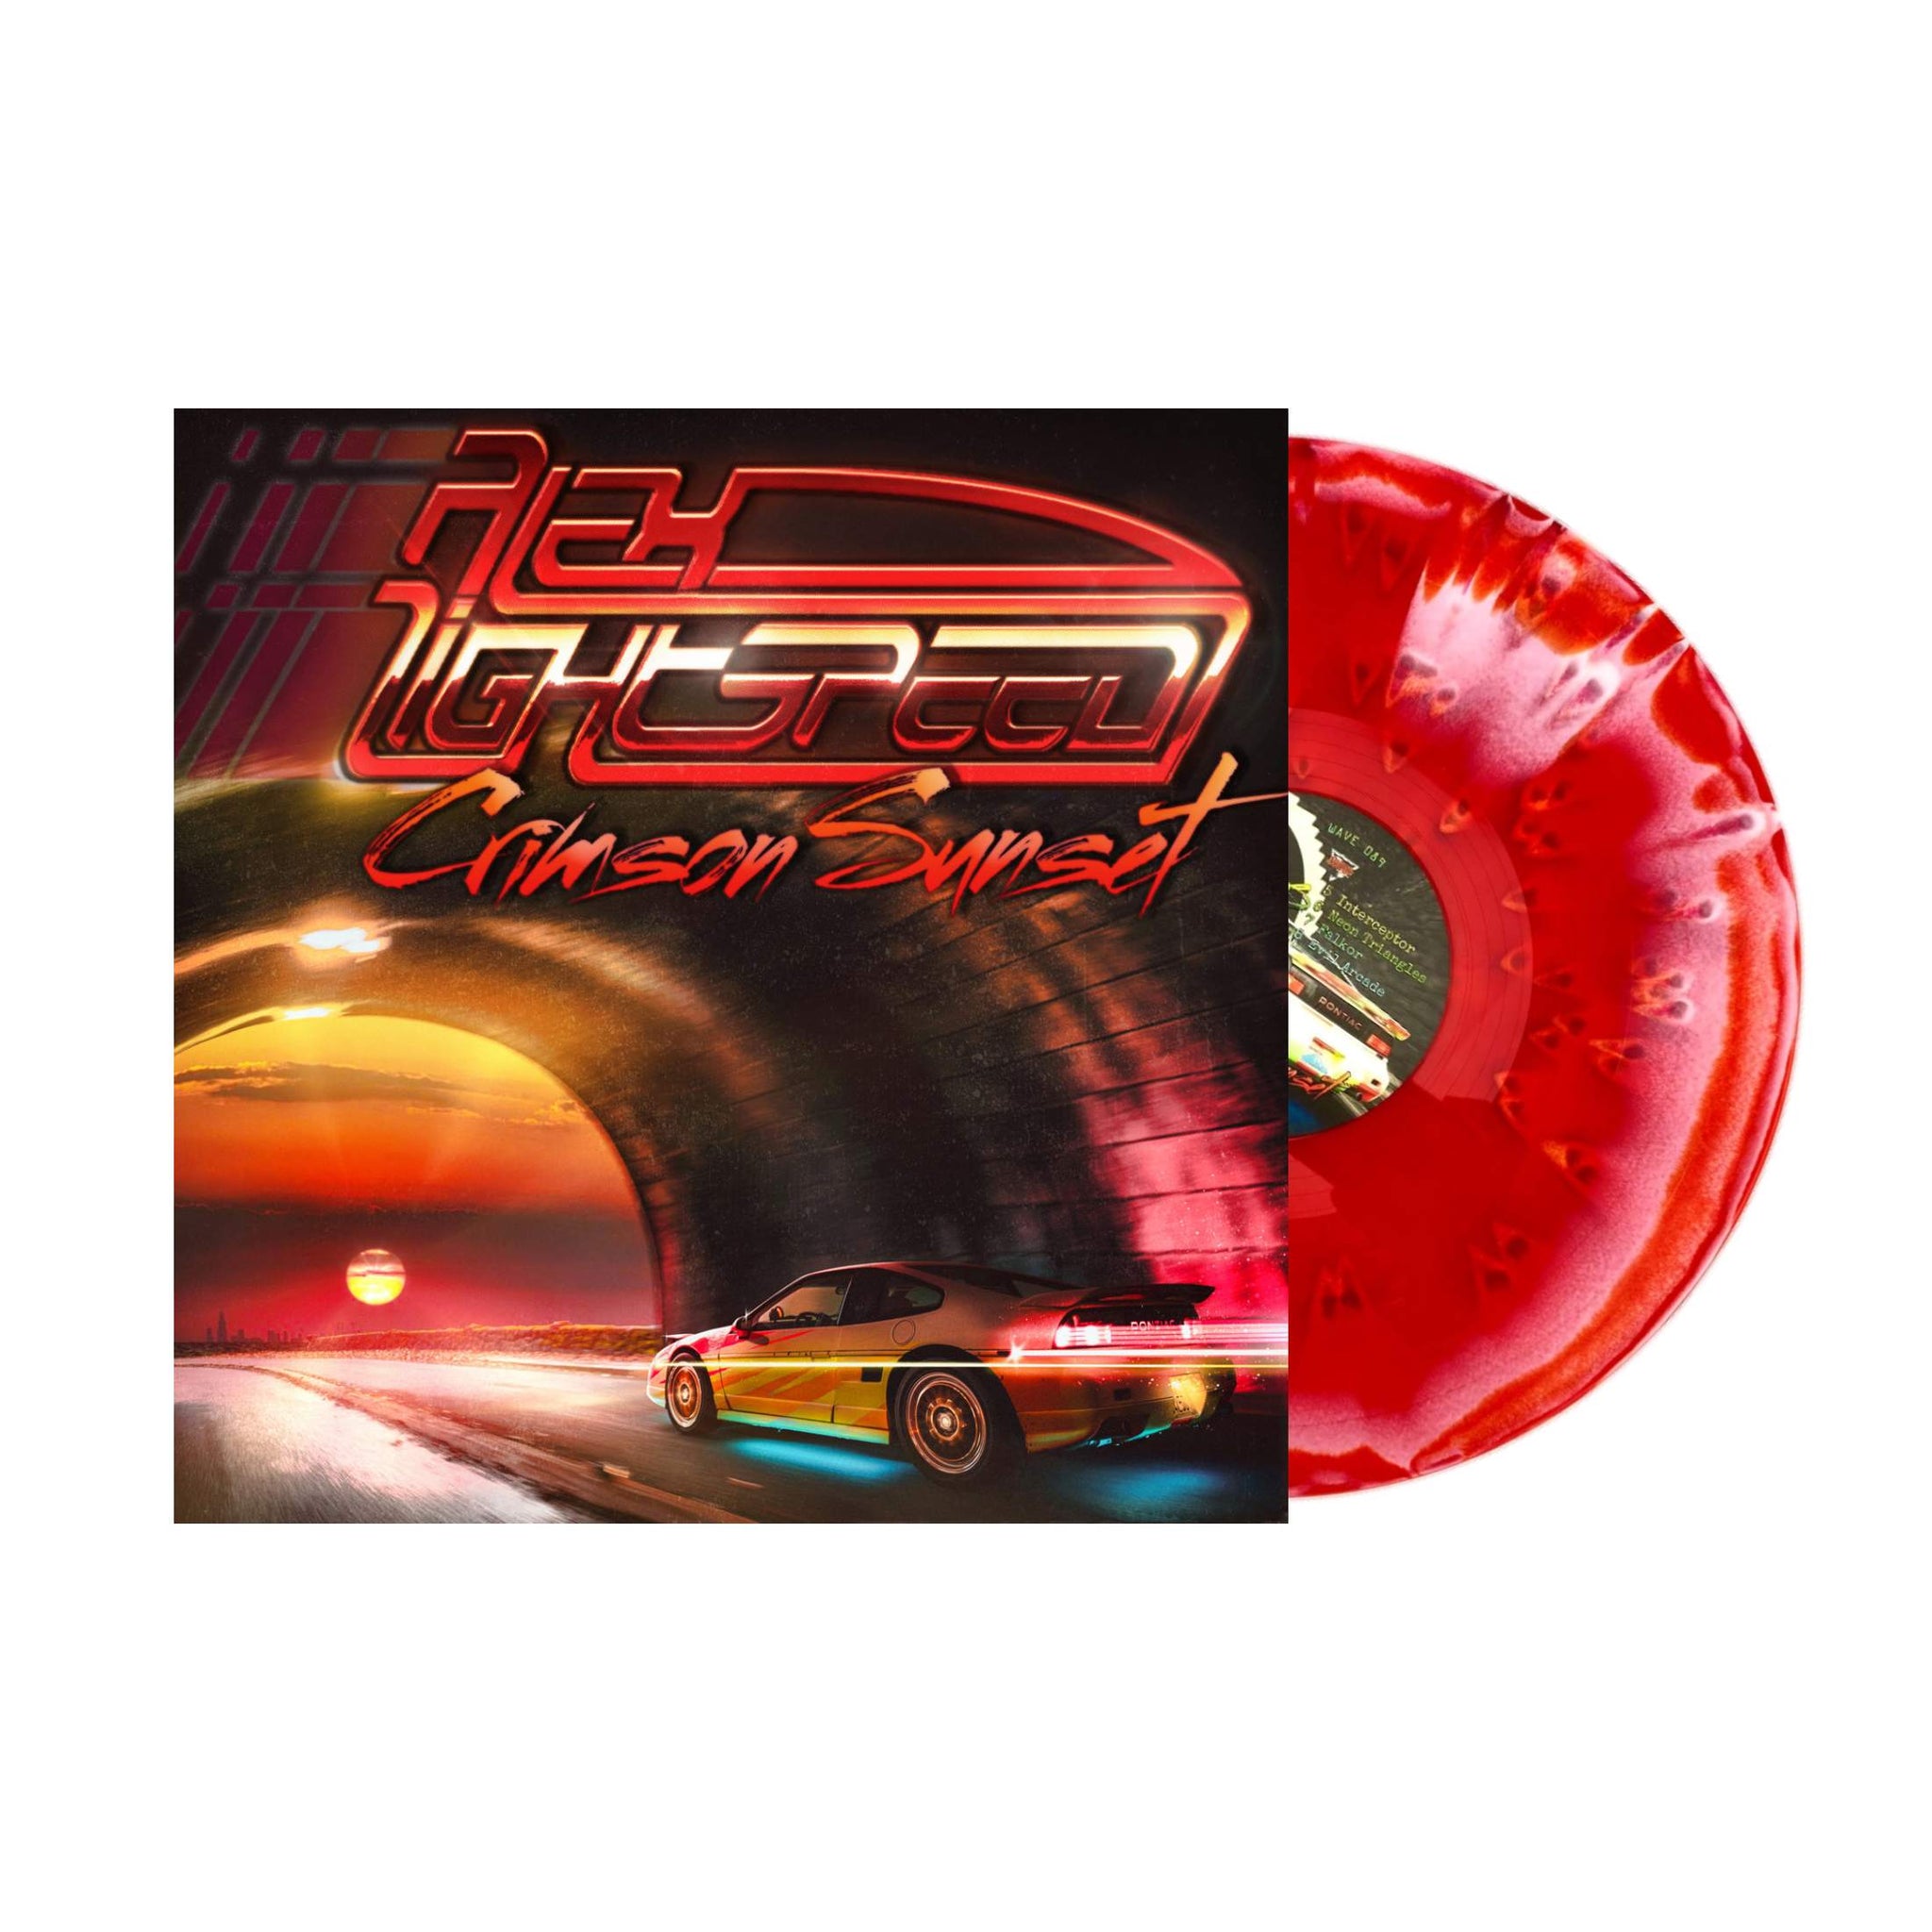 Alex Lightspeed - Crimson Sunset LP (Red Pink Swirl Vinyl)